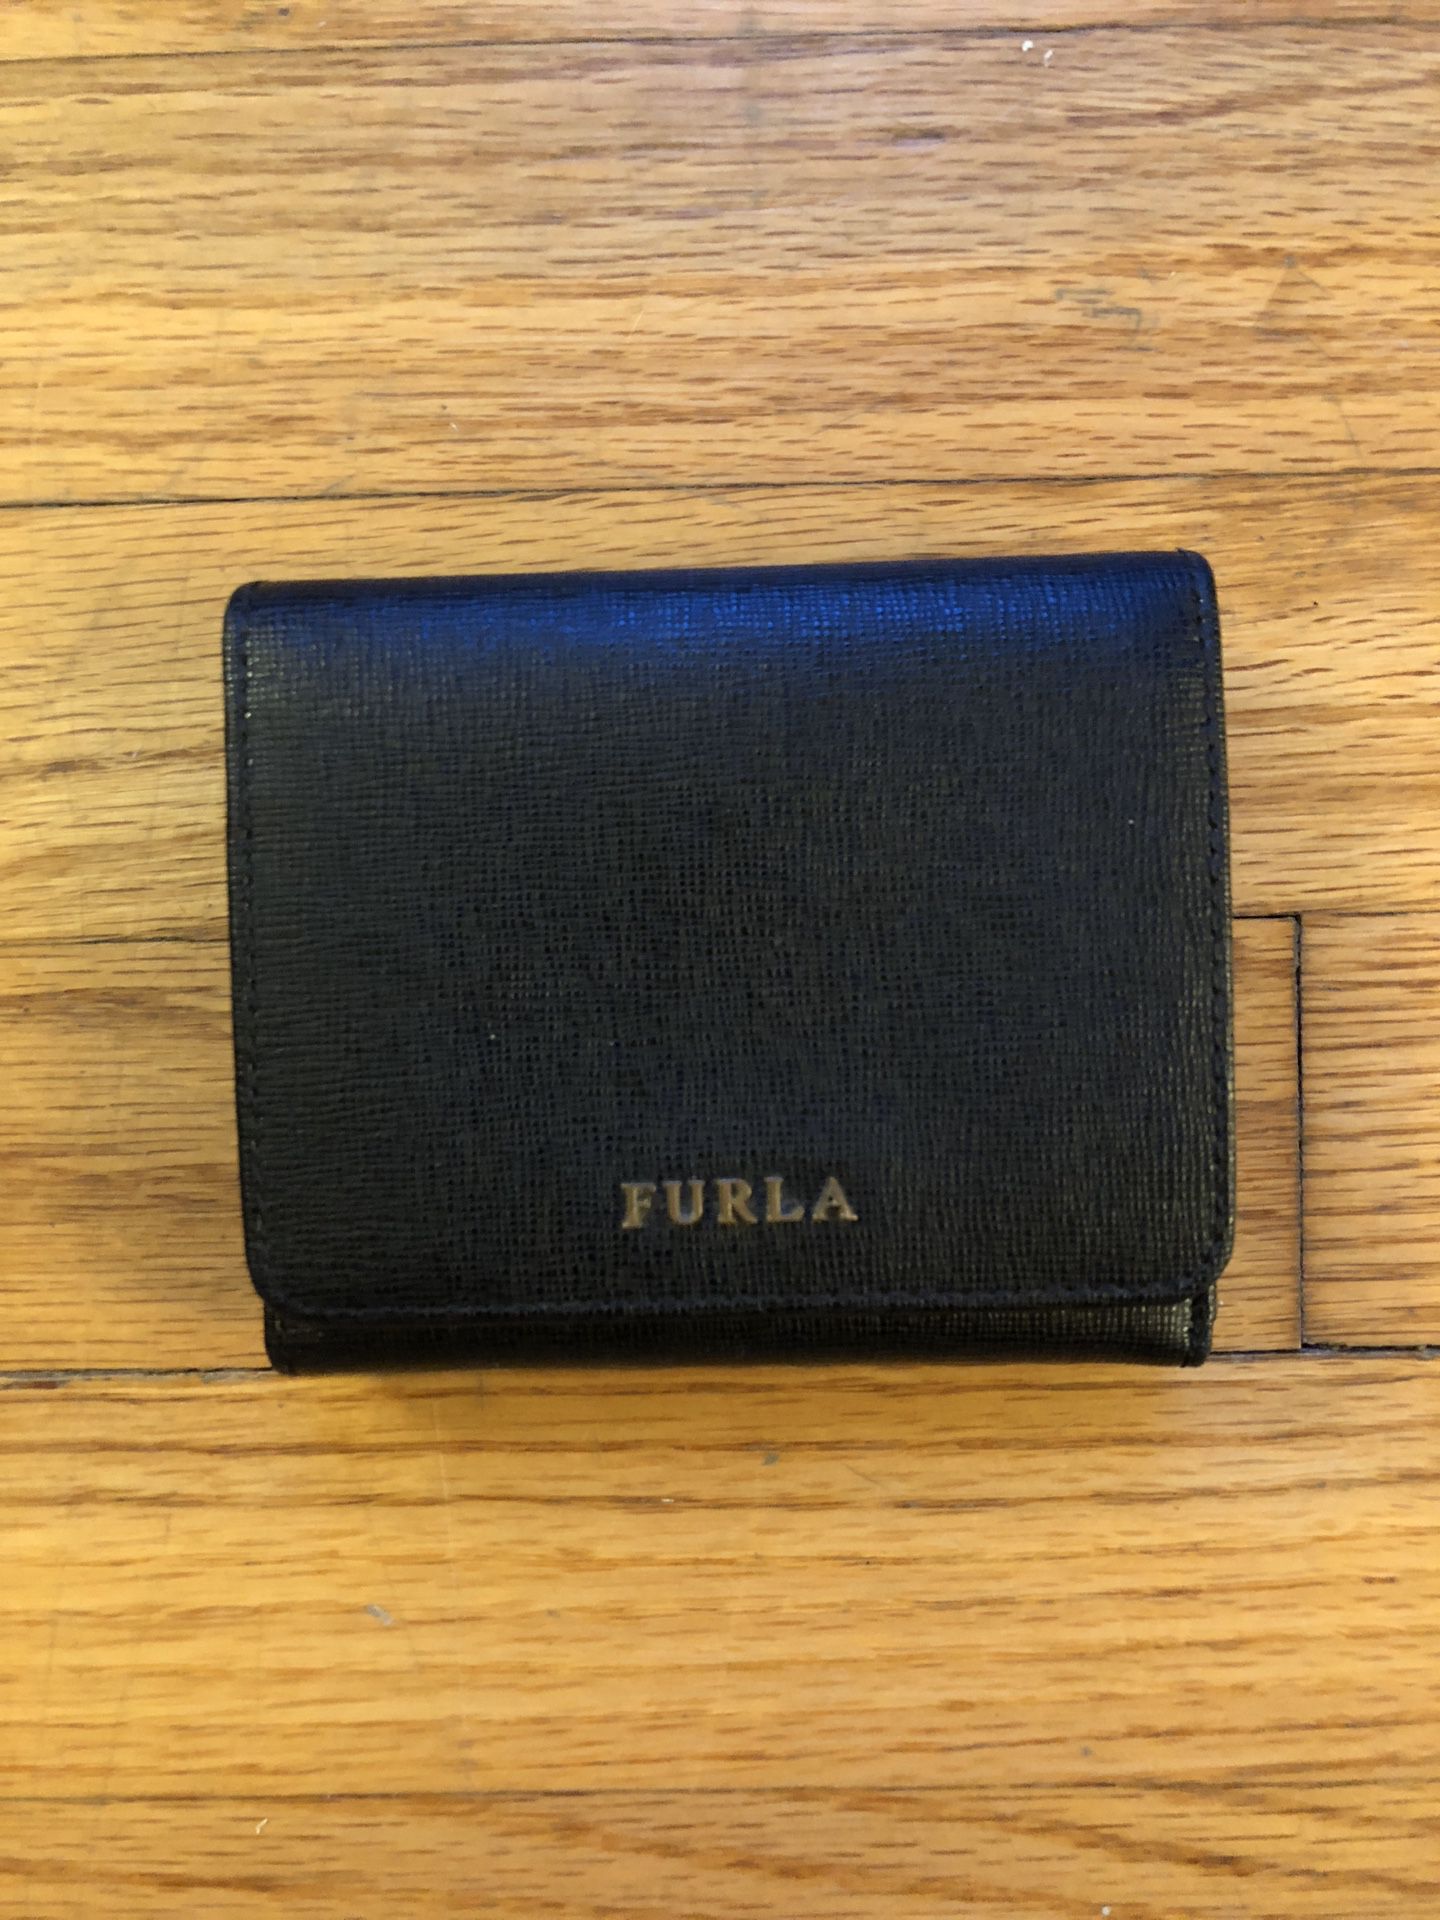 Furla black small wallet